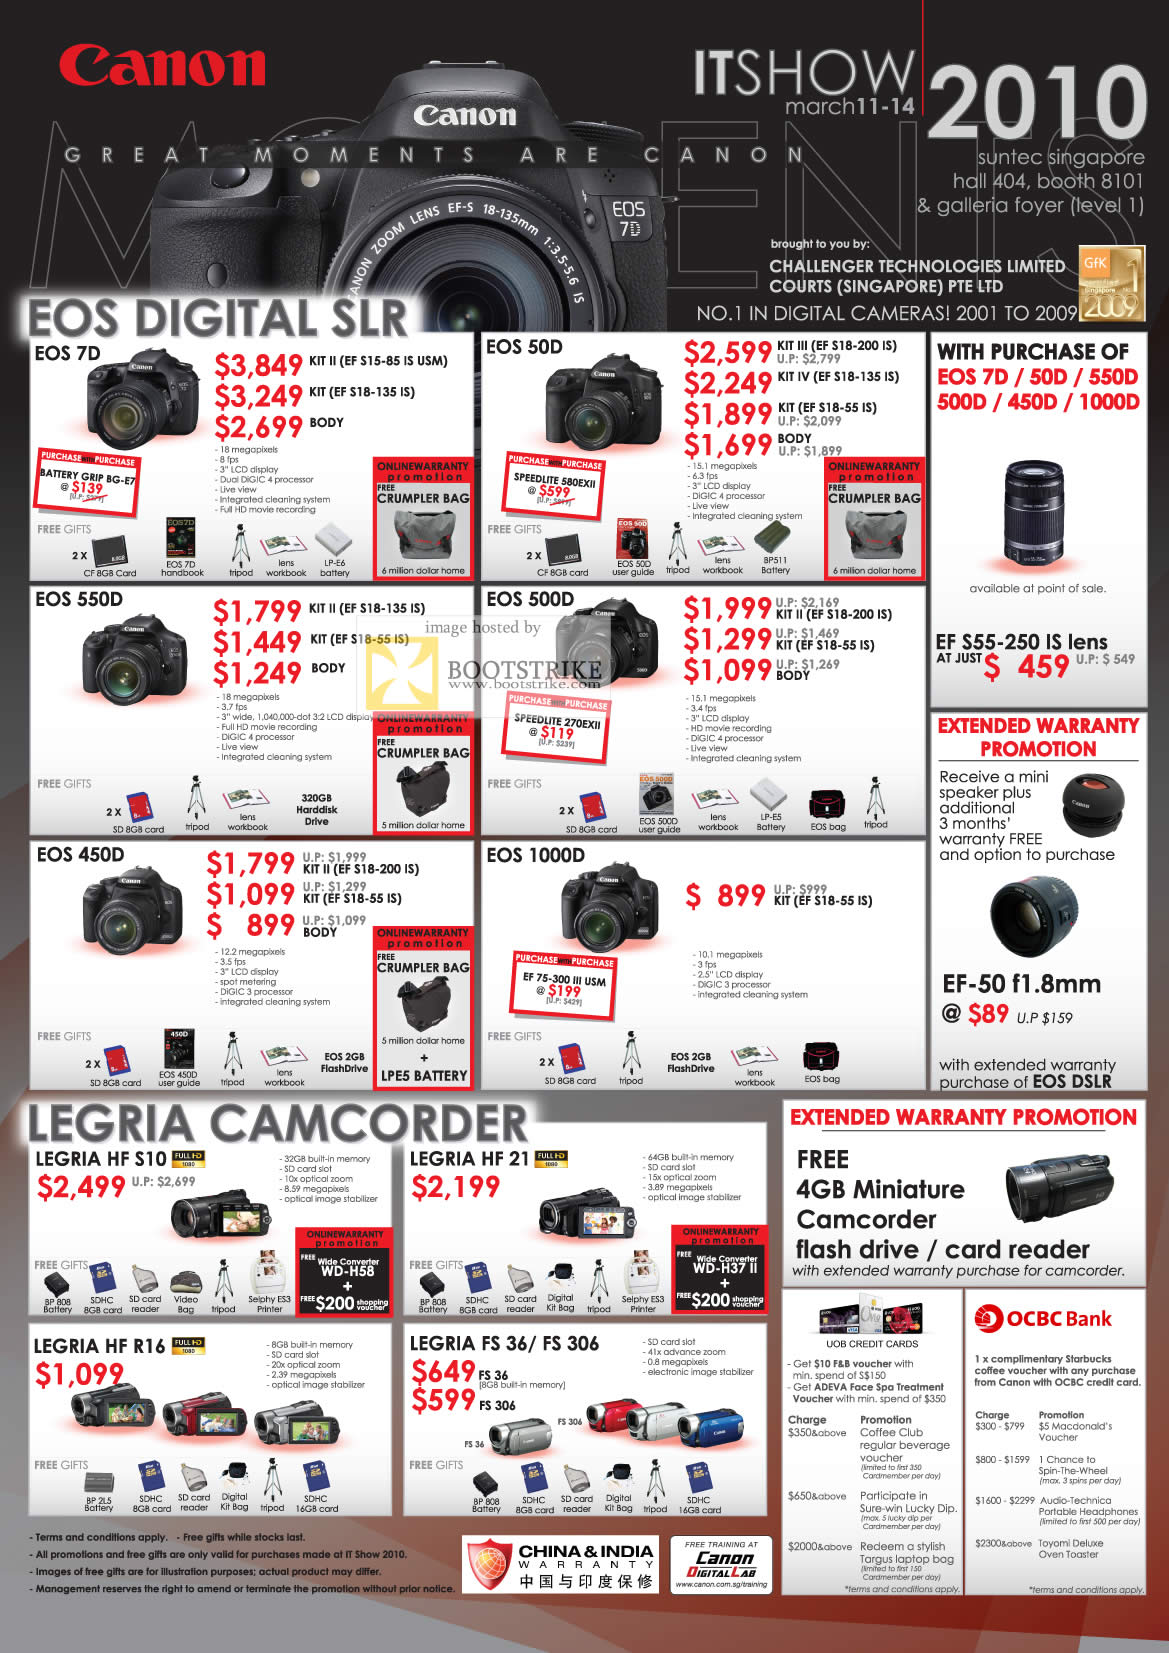 IT Show 2010 price list image brochure of Canon Digital Cameras SLR DSLR EOS 7D 50D 550D 500D 450D 1000D Legria Video Camcorder HF S10 HF 21 HF R16 FS 36 306